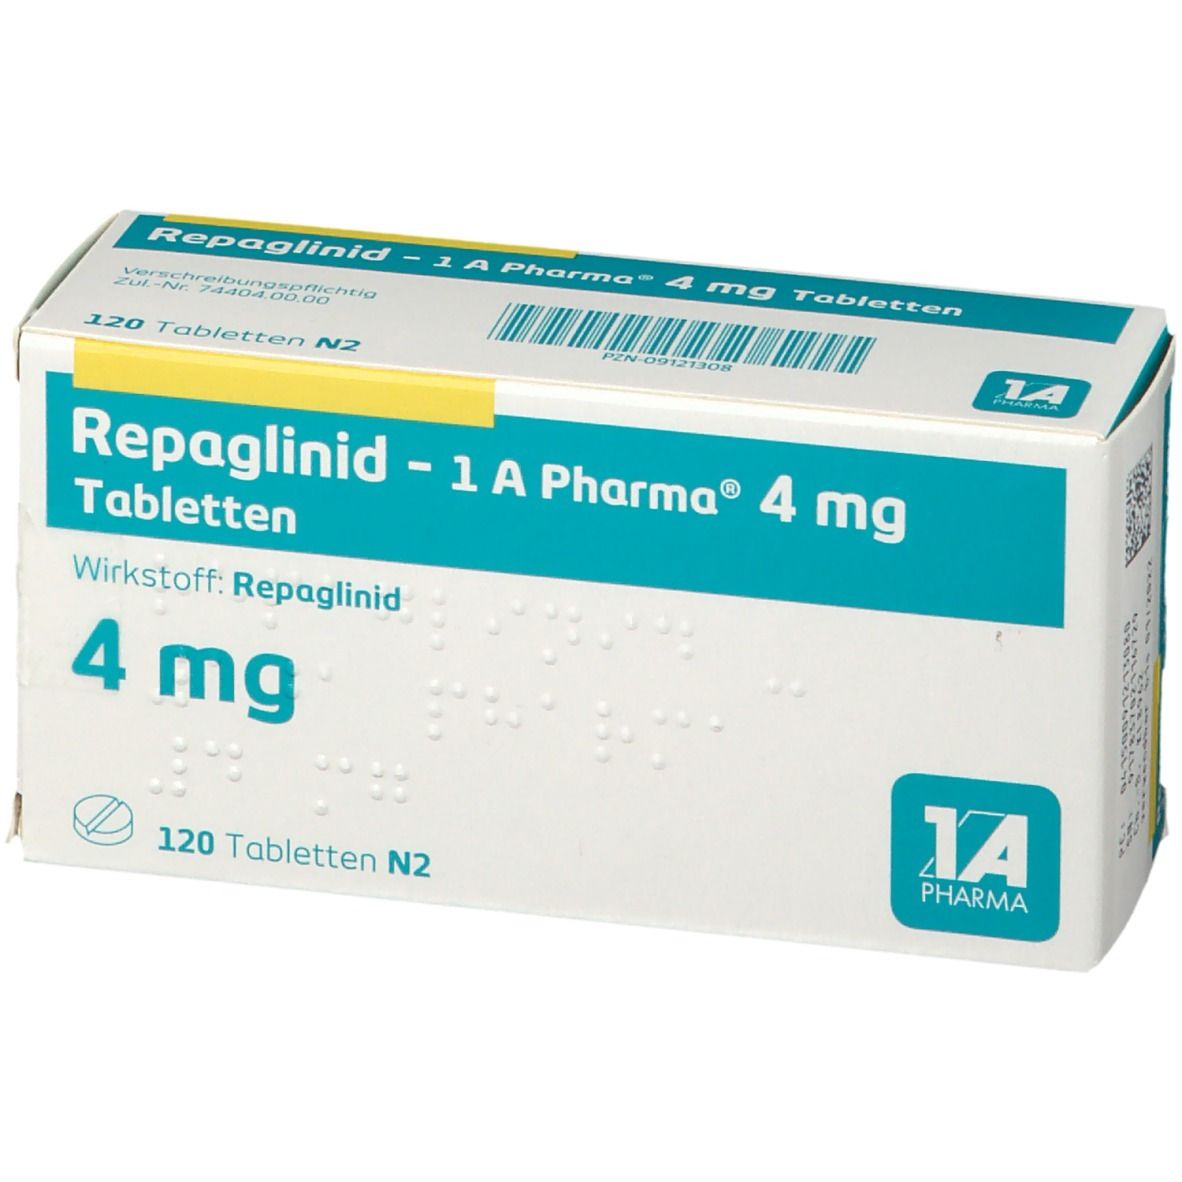 Repaglinid - 1 A Pharma® 4 mg